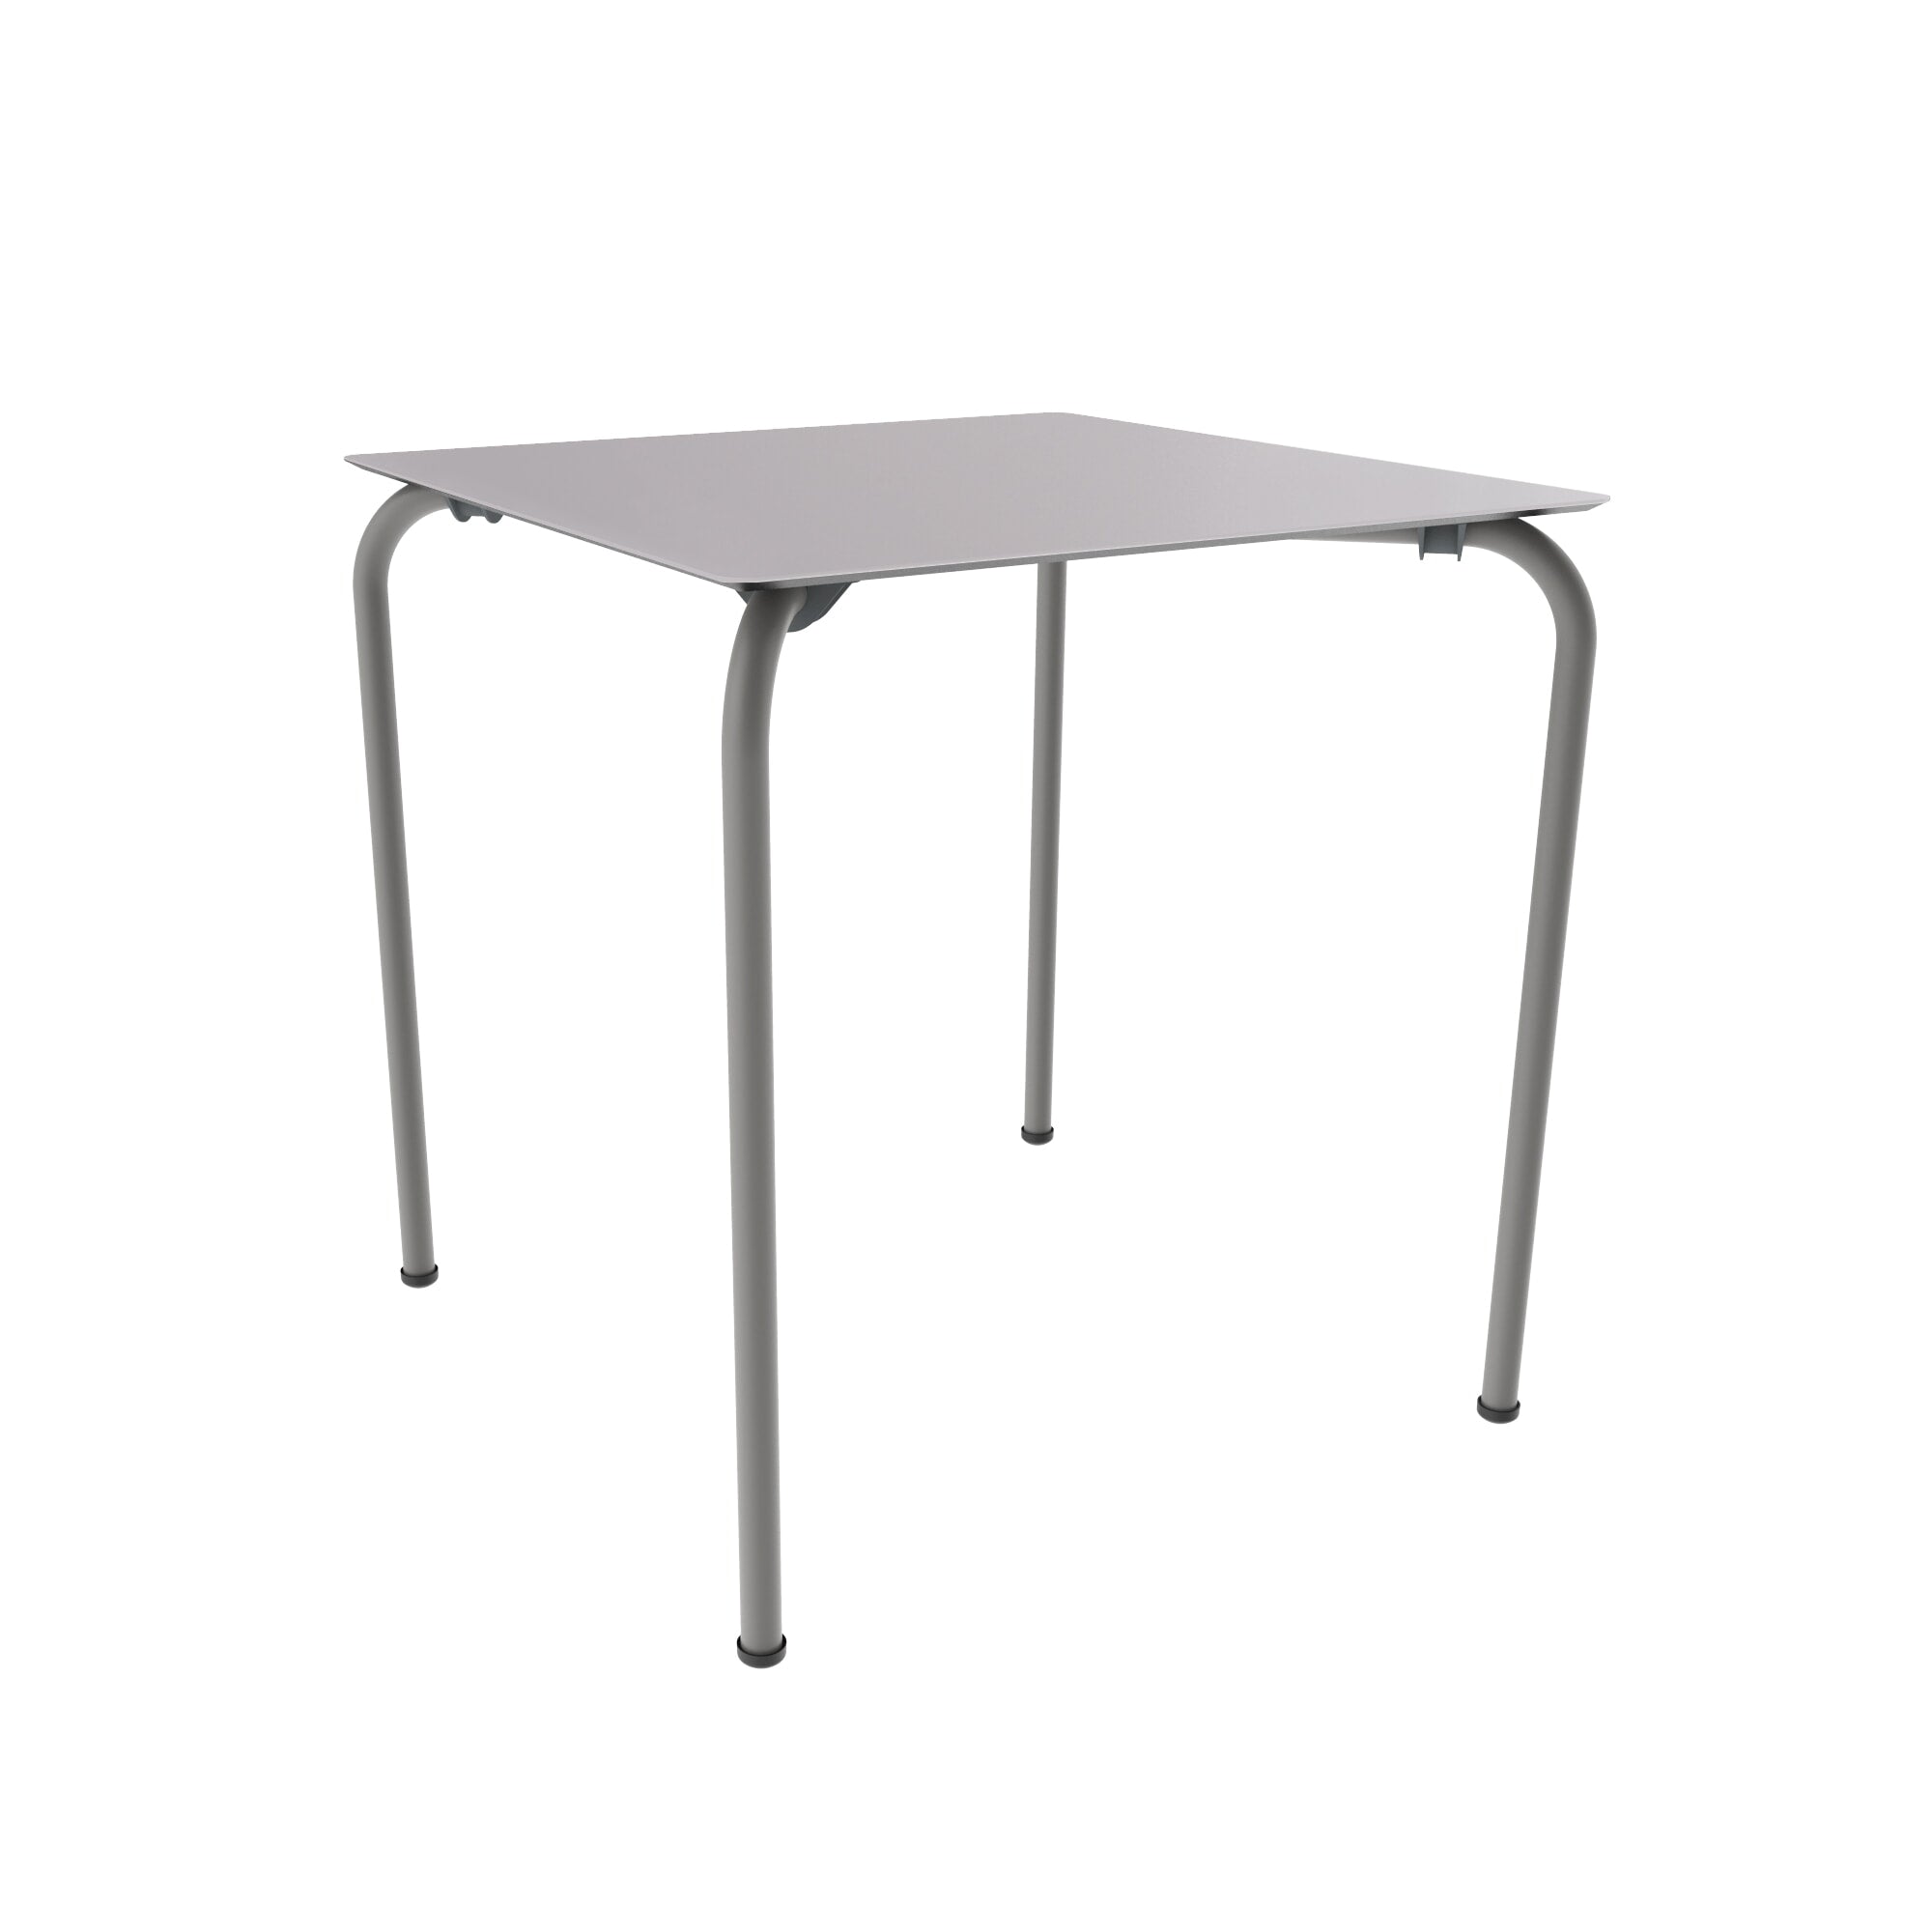 Garbar core square table outdoor 70x70 silver